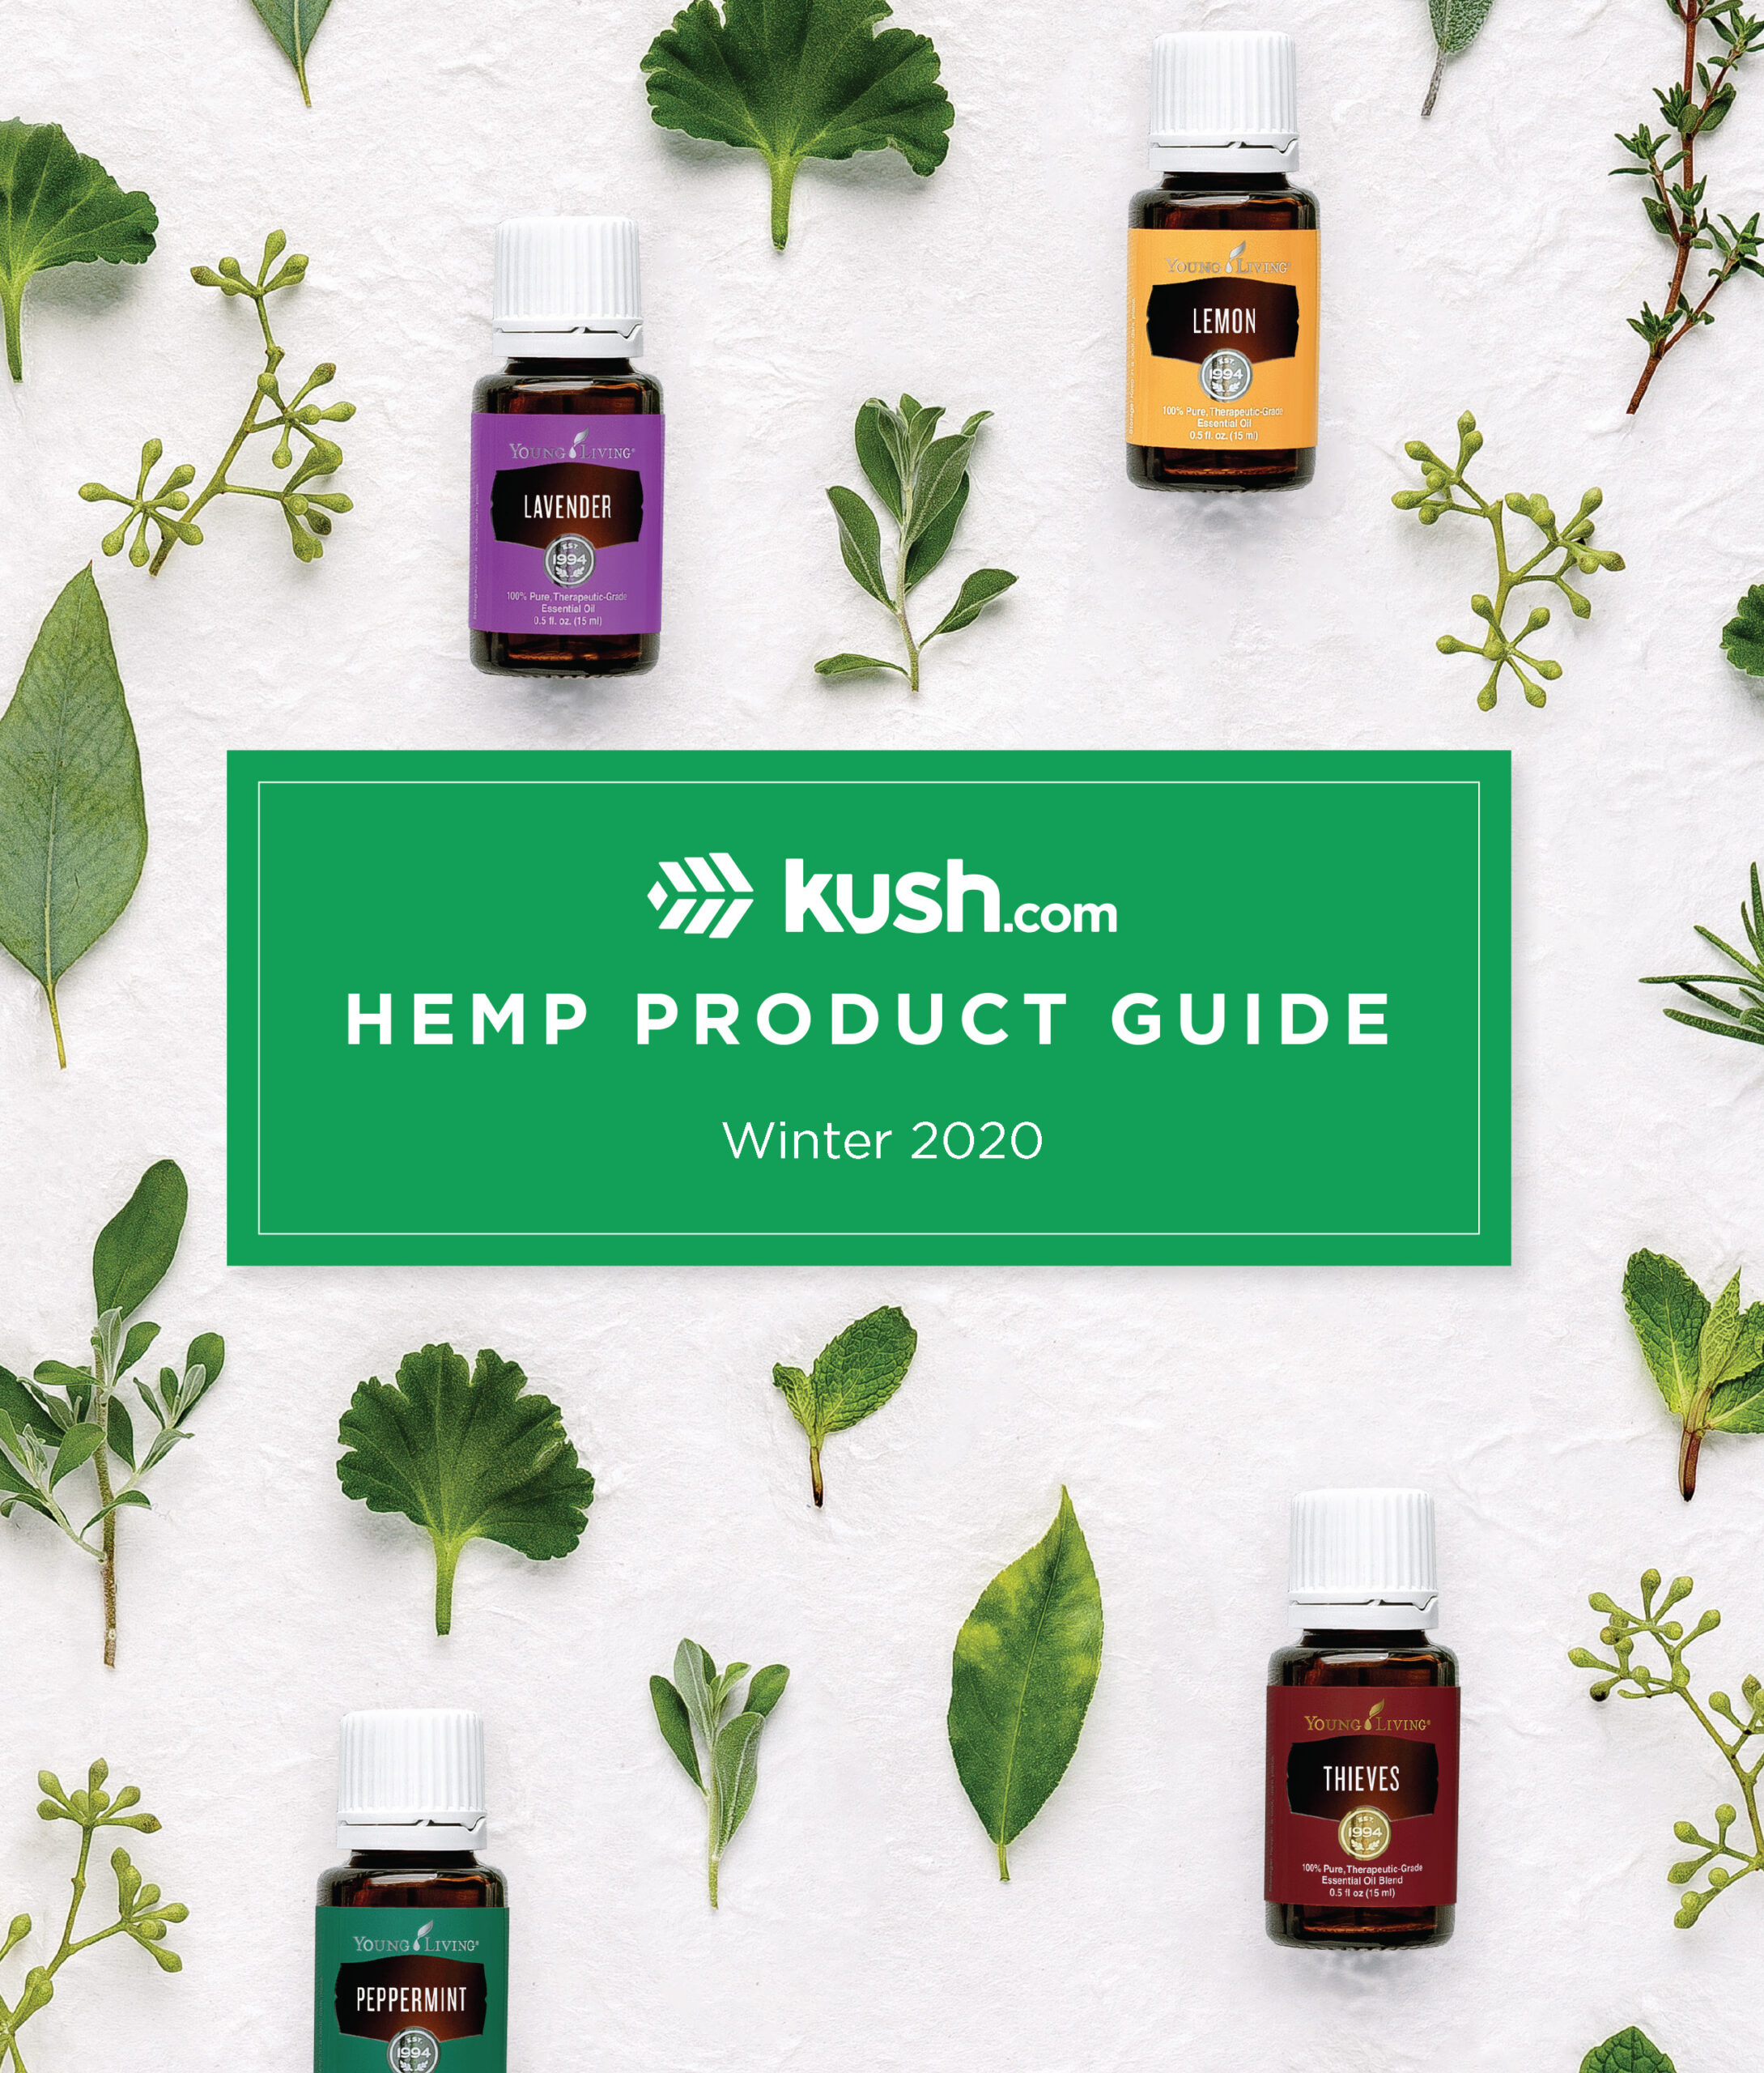 Meet the 2020 Kush.com Product Guide – Hemp & CBD